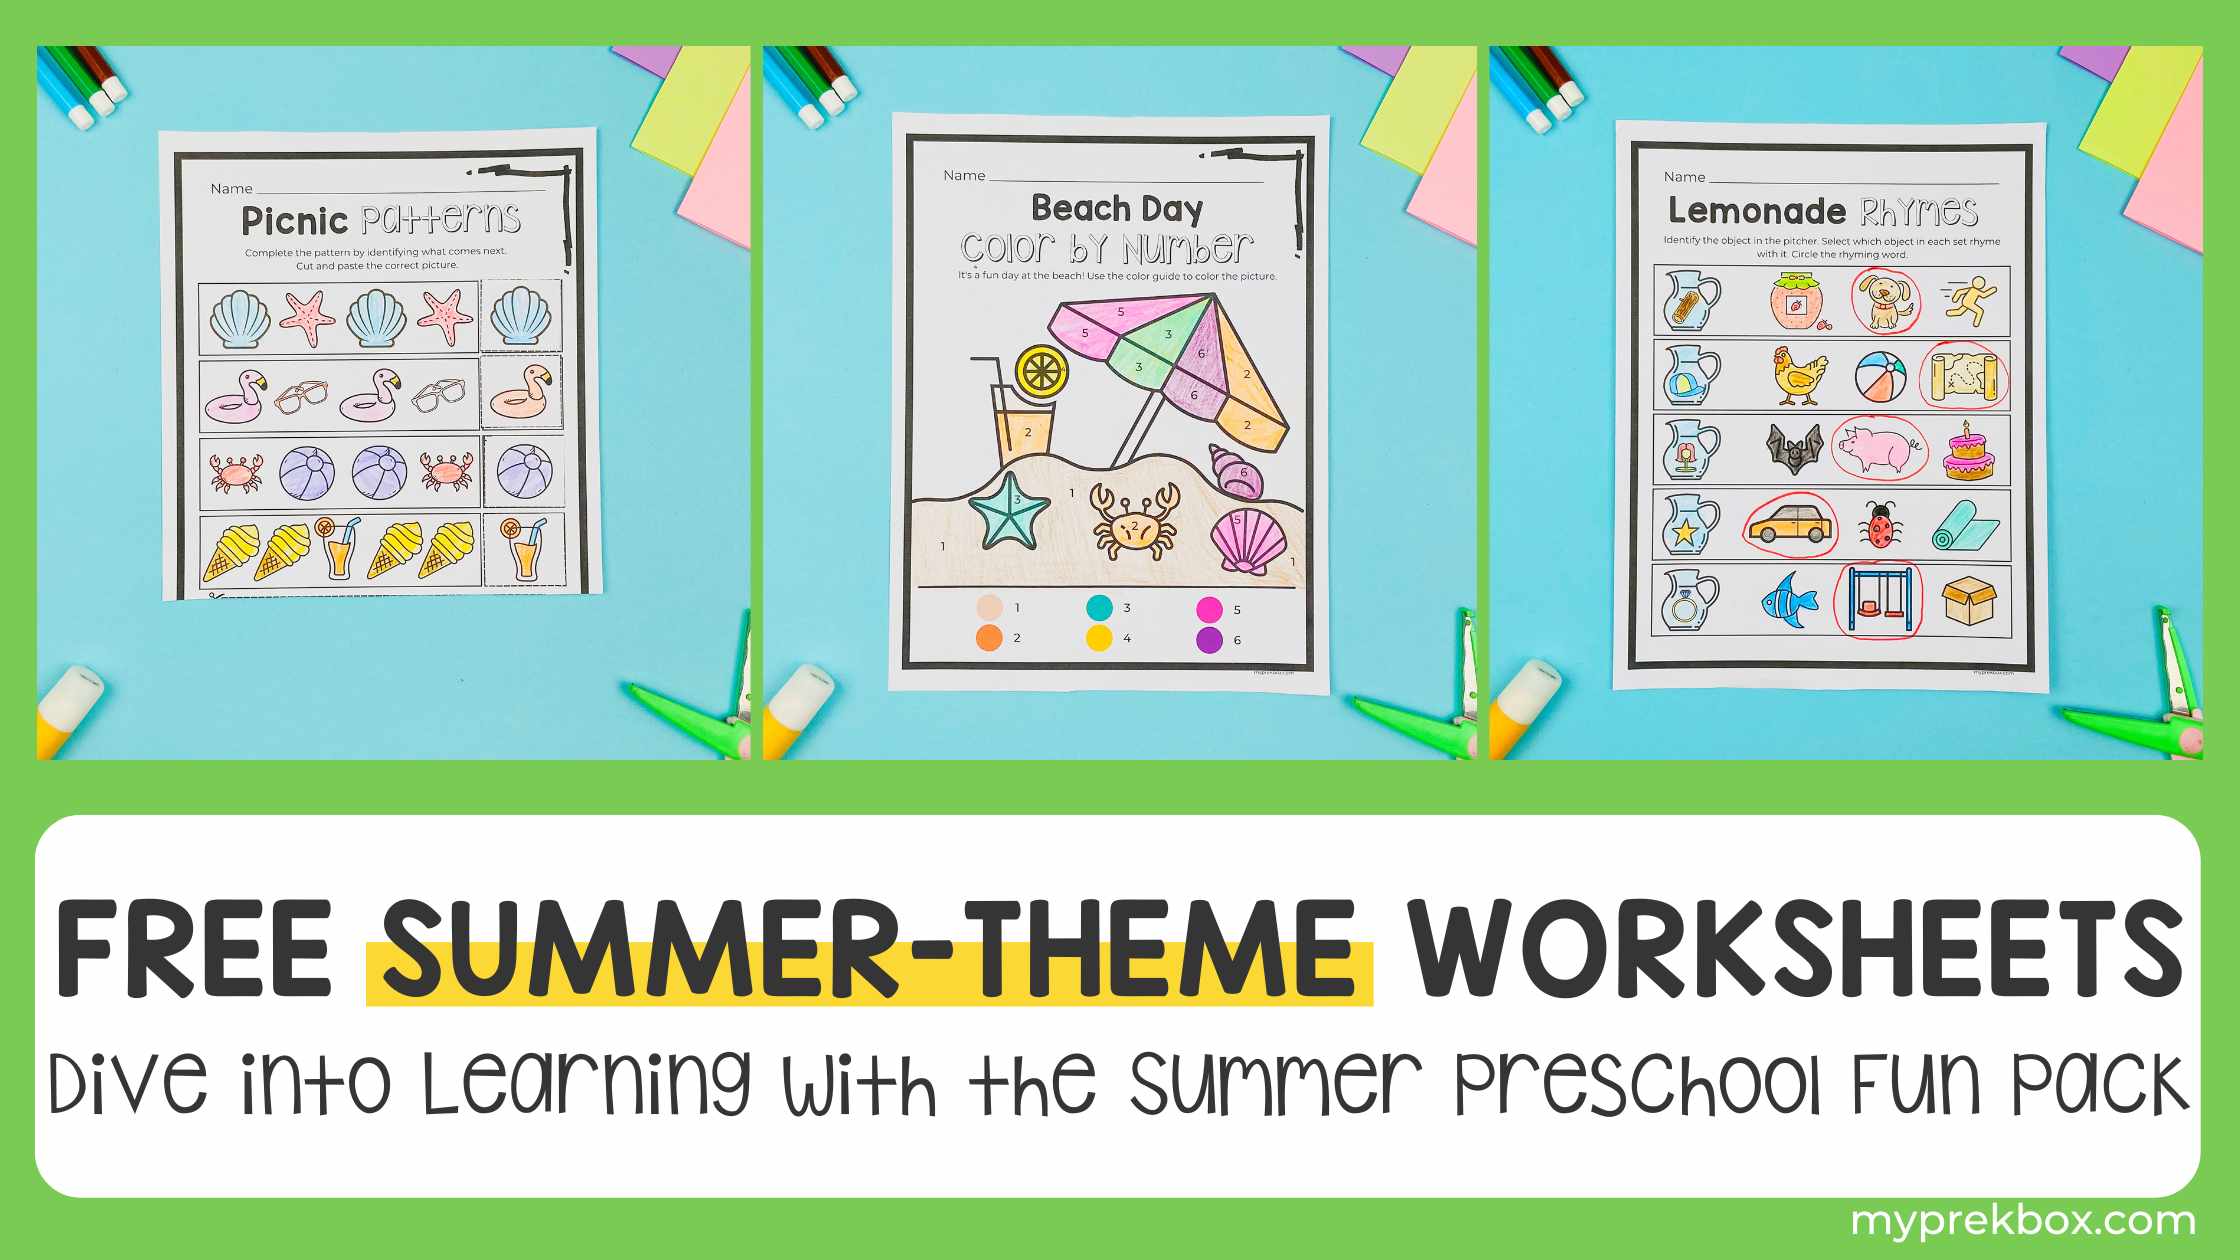 Summer Preschool Fun Pack: Free Summer-theme Worksheets for Preschoolers